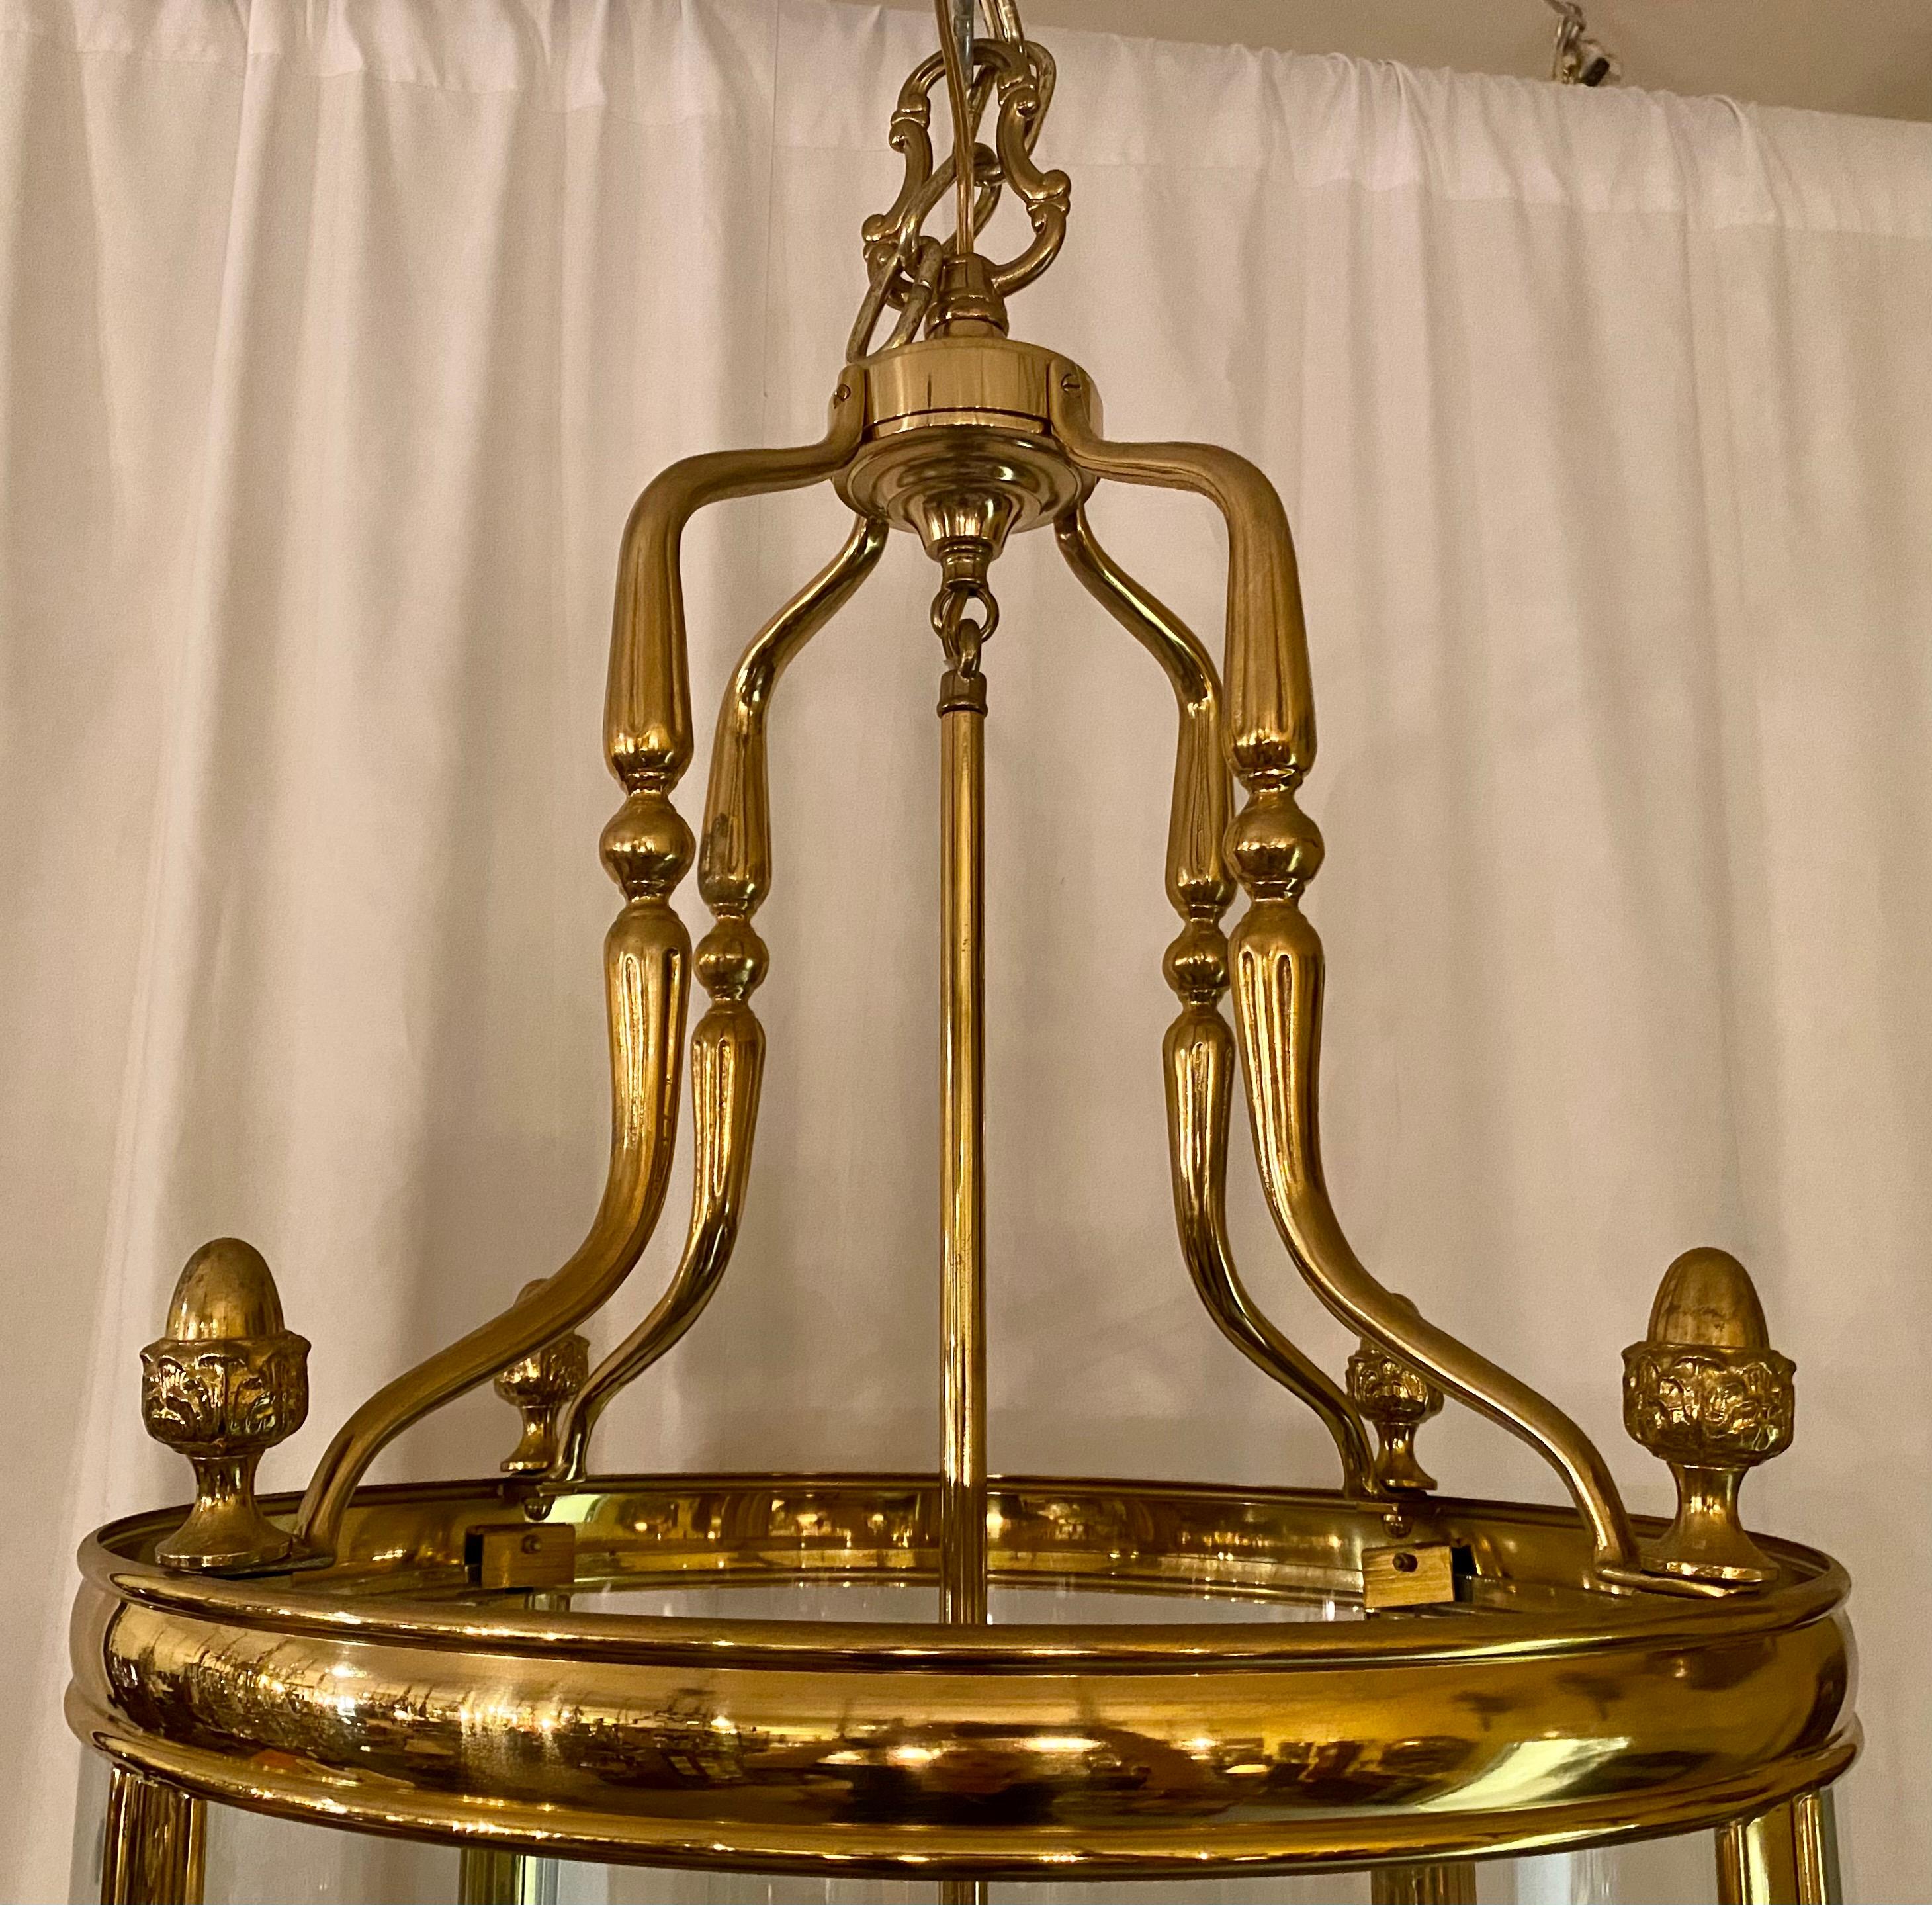 Unusually large size solid brass neoclassic hall lantern.
LAN002.